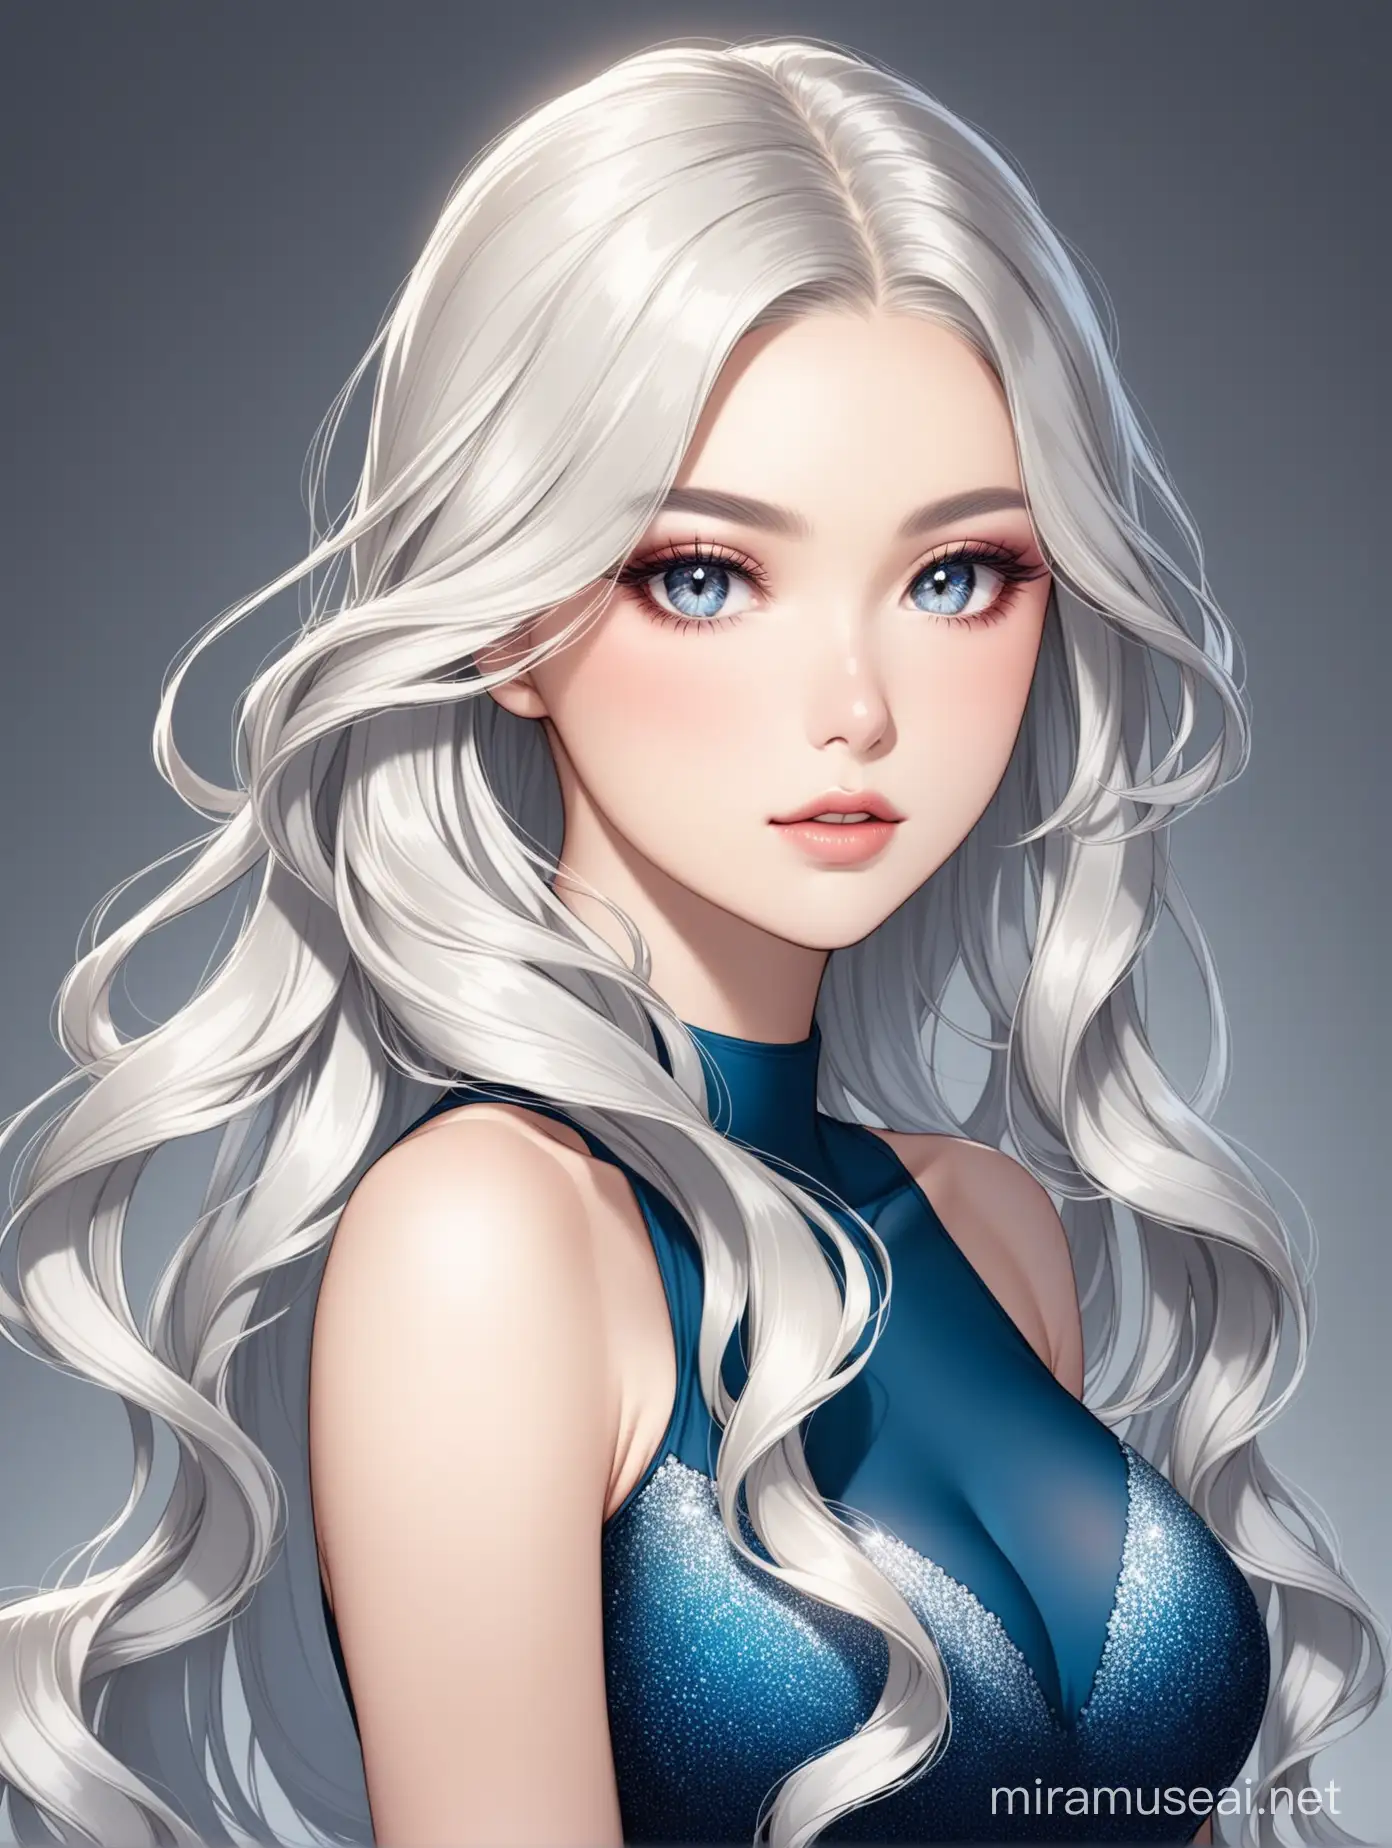 Elegant Woman with Platinum Blonde Hair and Blue Dress